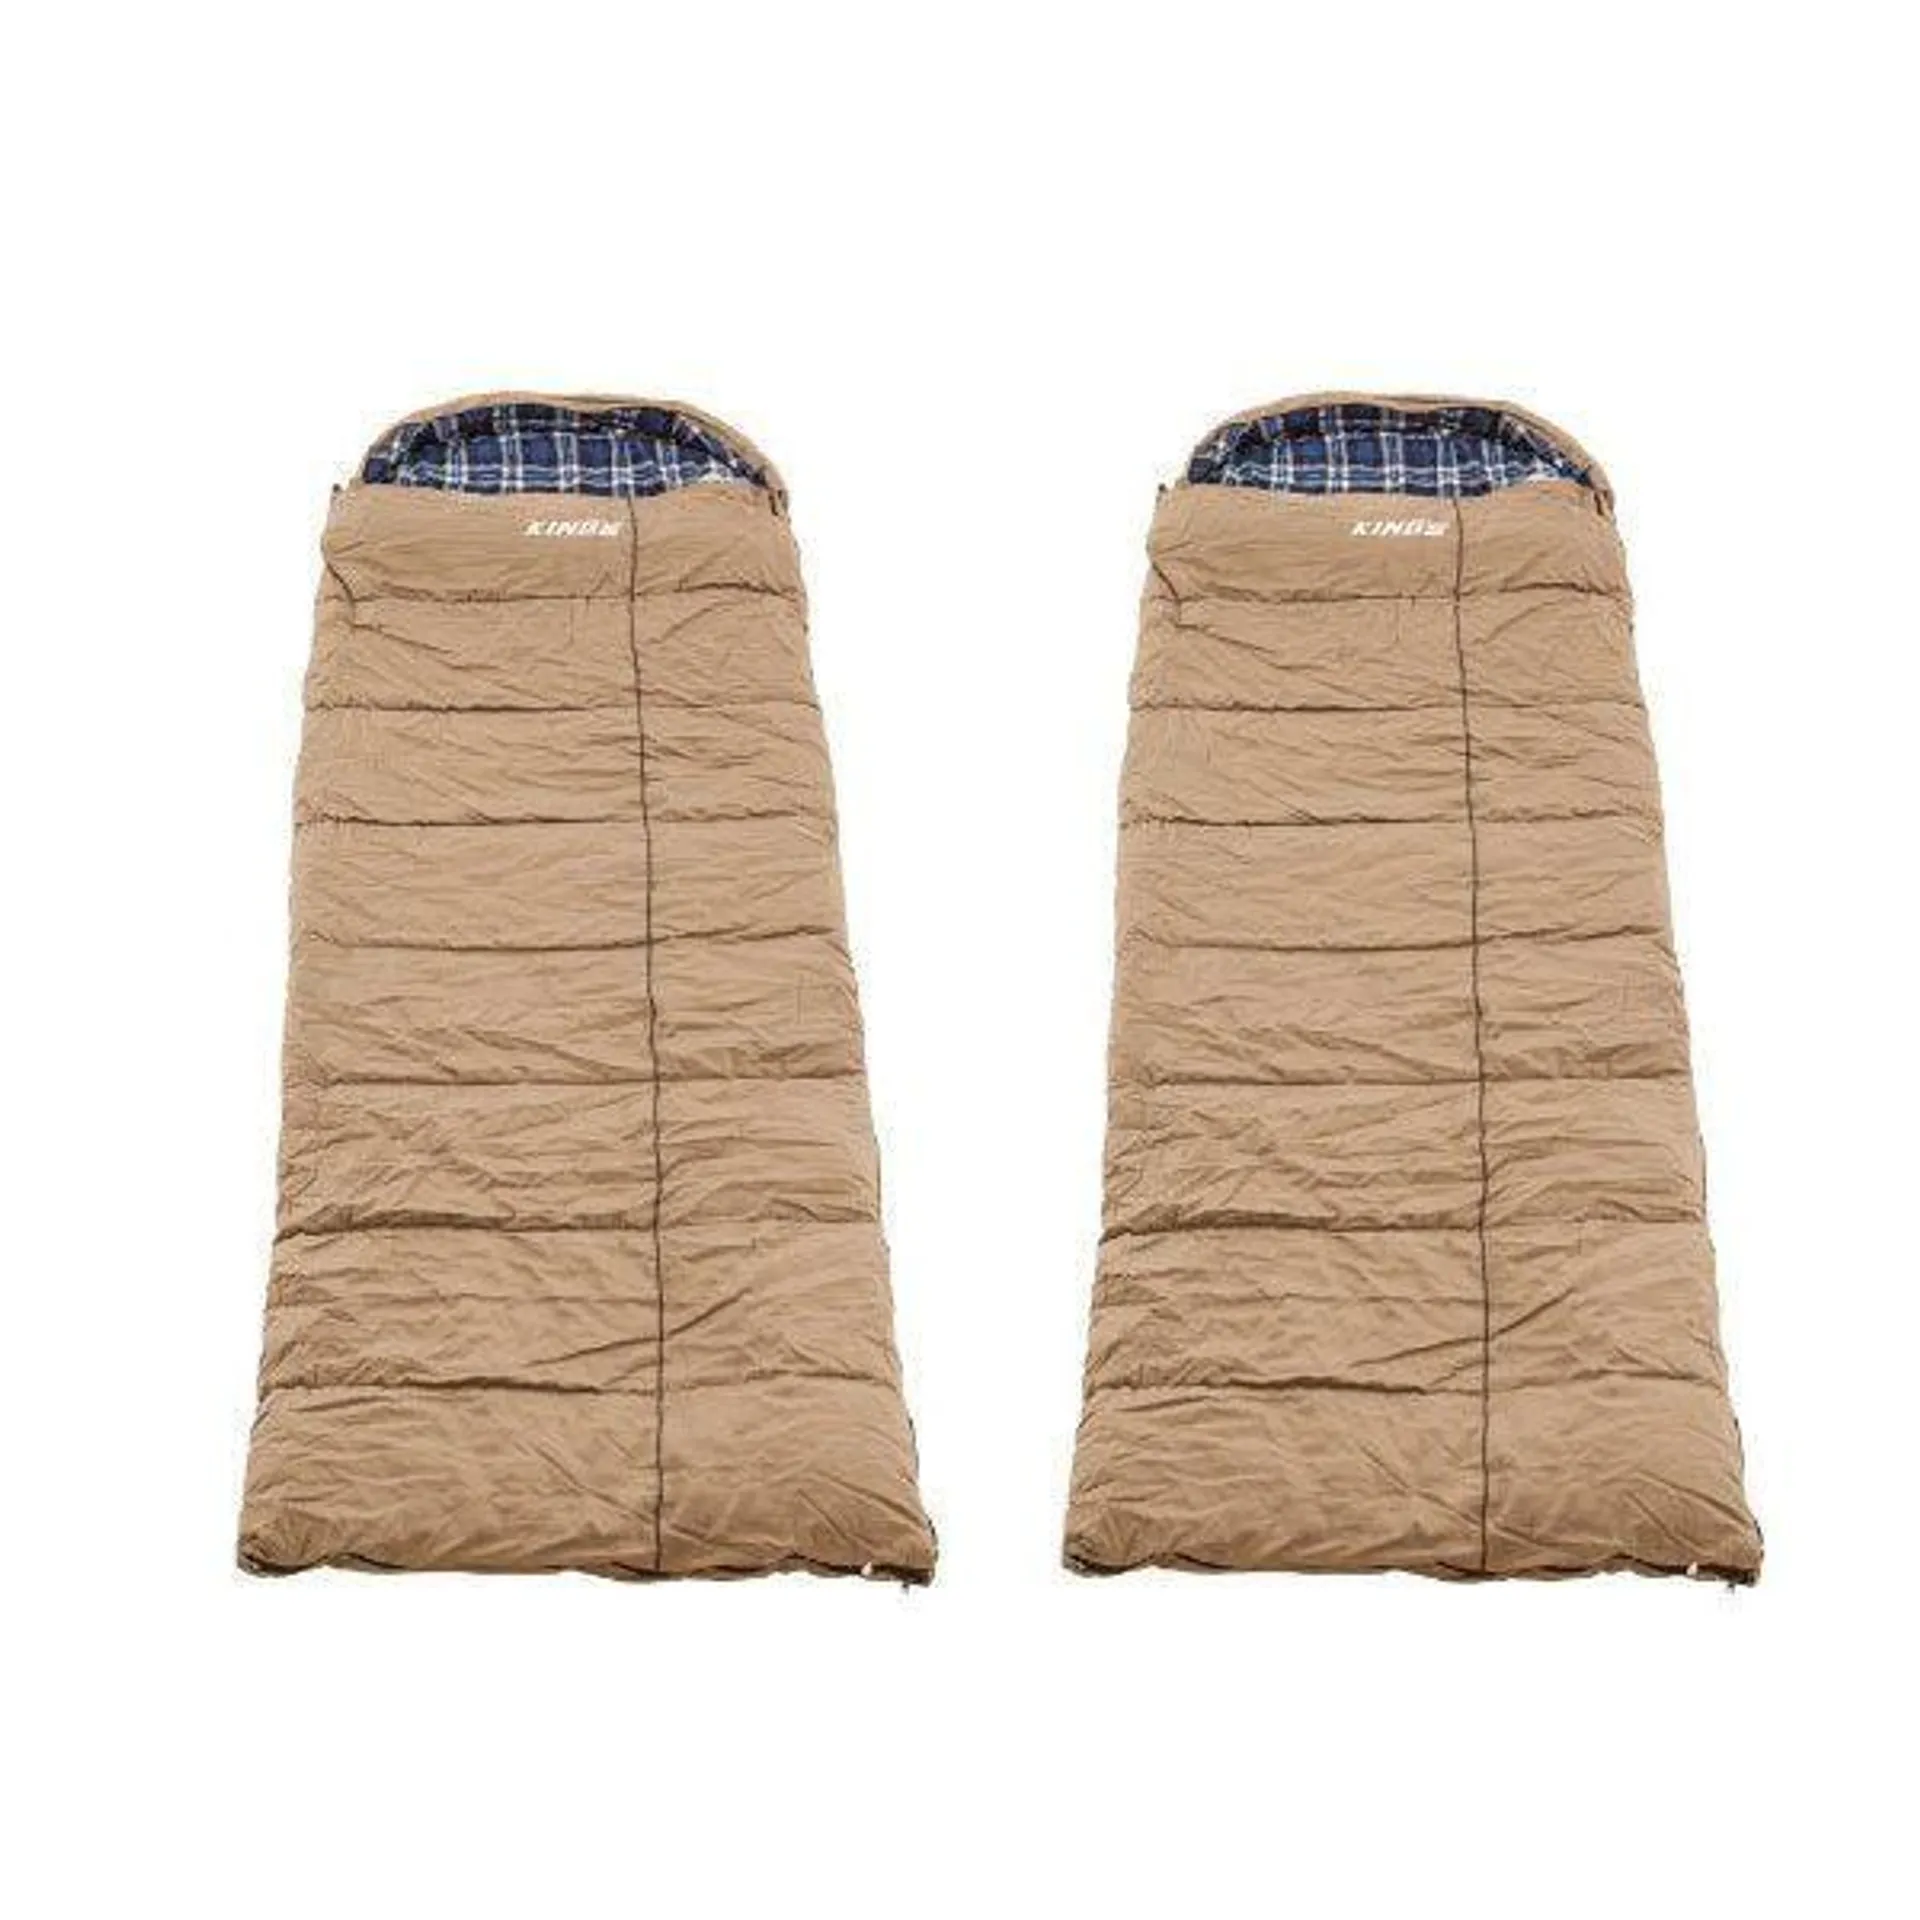 2x Adventure Kings Premium Sleeping bag -5°C to 5°C Degrees Celsius - Left and Right Zipper